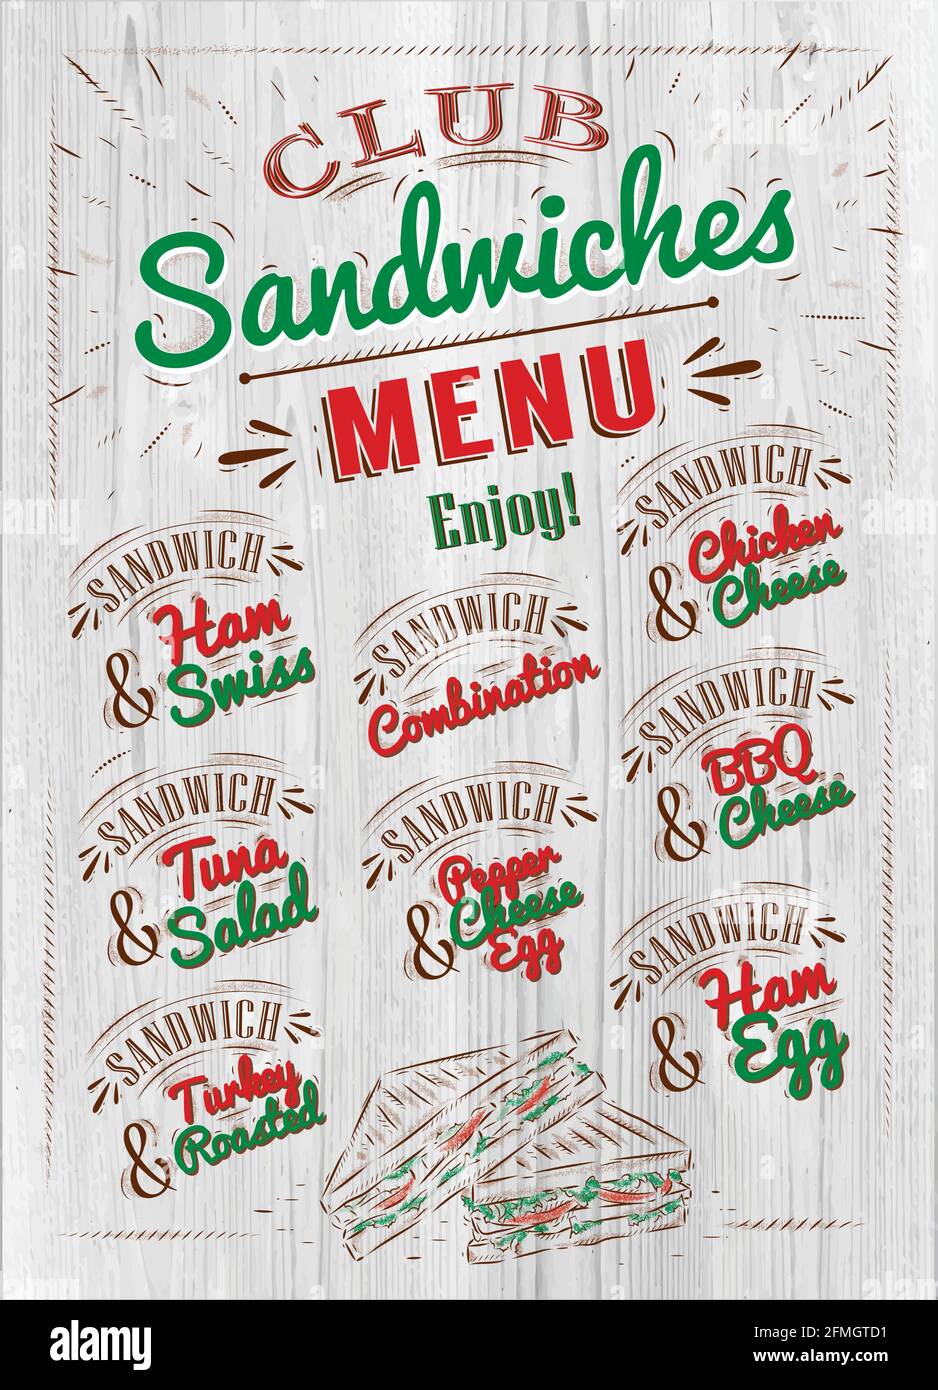 Sandwiches menu the names of sandwiches , ham swiss, chicken cheese, tuna salad, bbq cheese, ham egg, pepper cheese eeg, turkry roasted design a menu Stock Vector